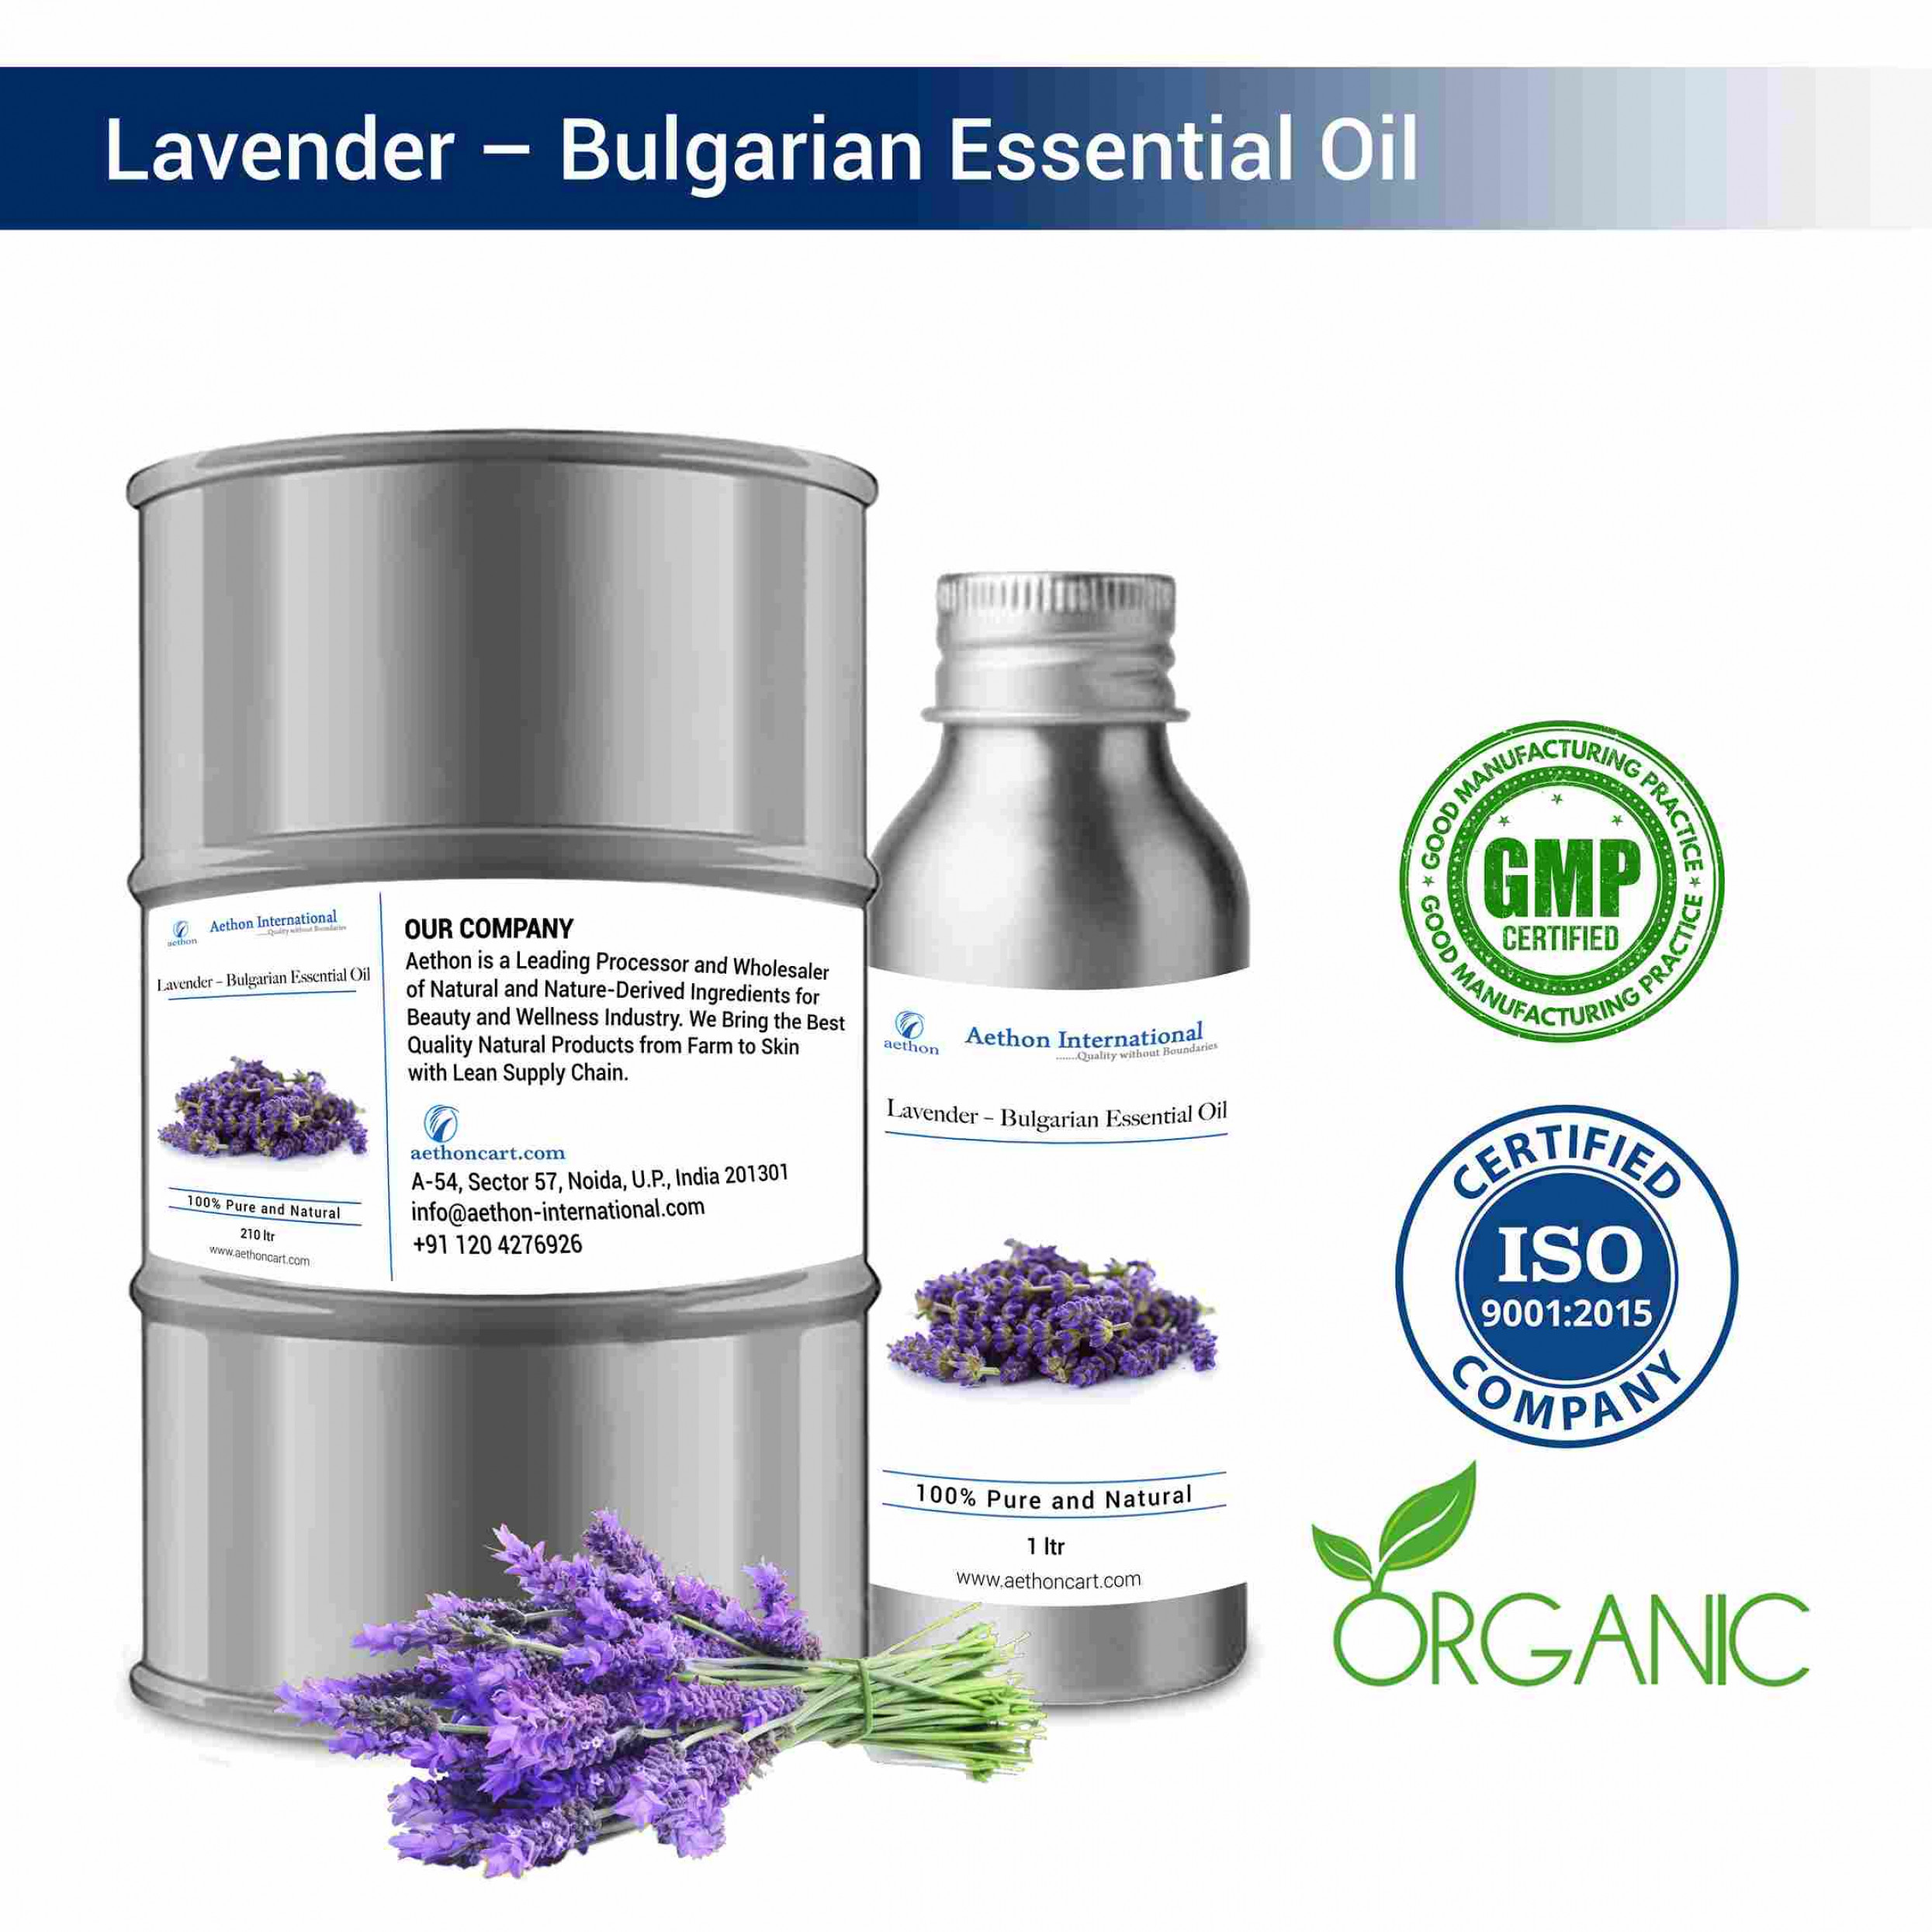 Lavender – Bulgarian Essential Oil